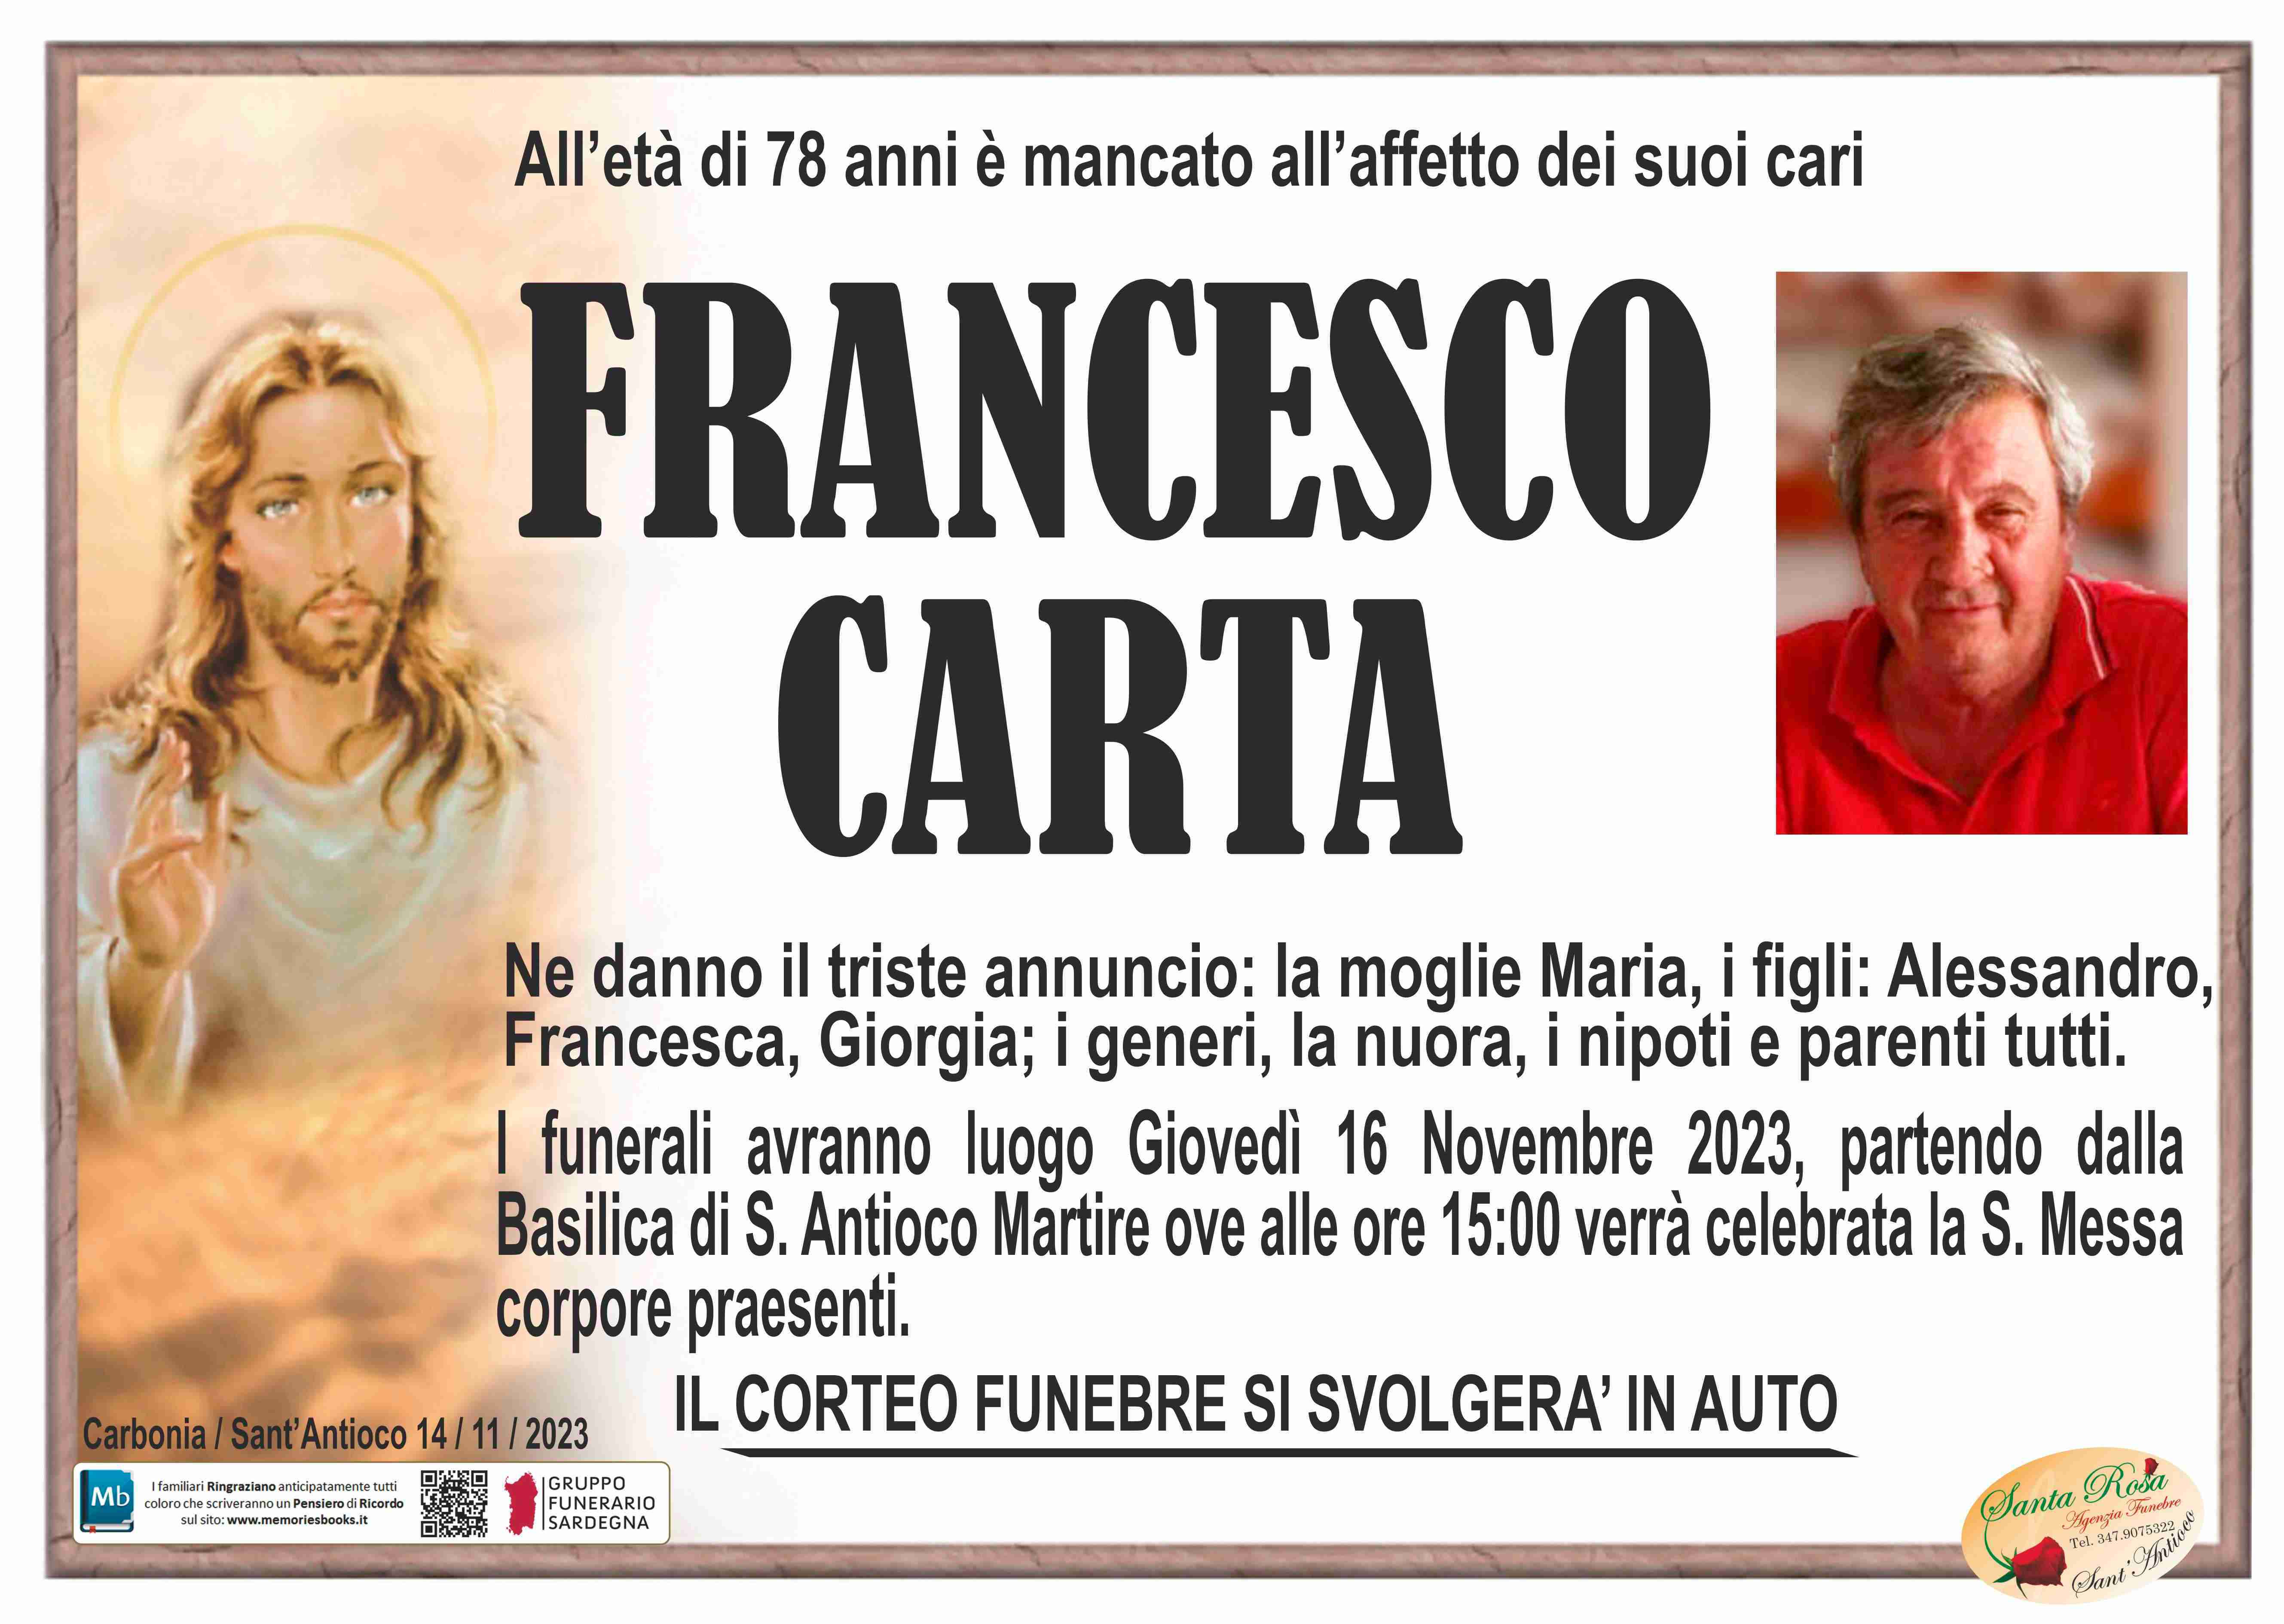 Francesco Carta